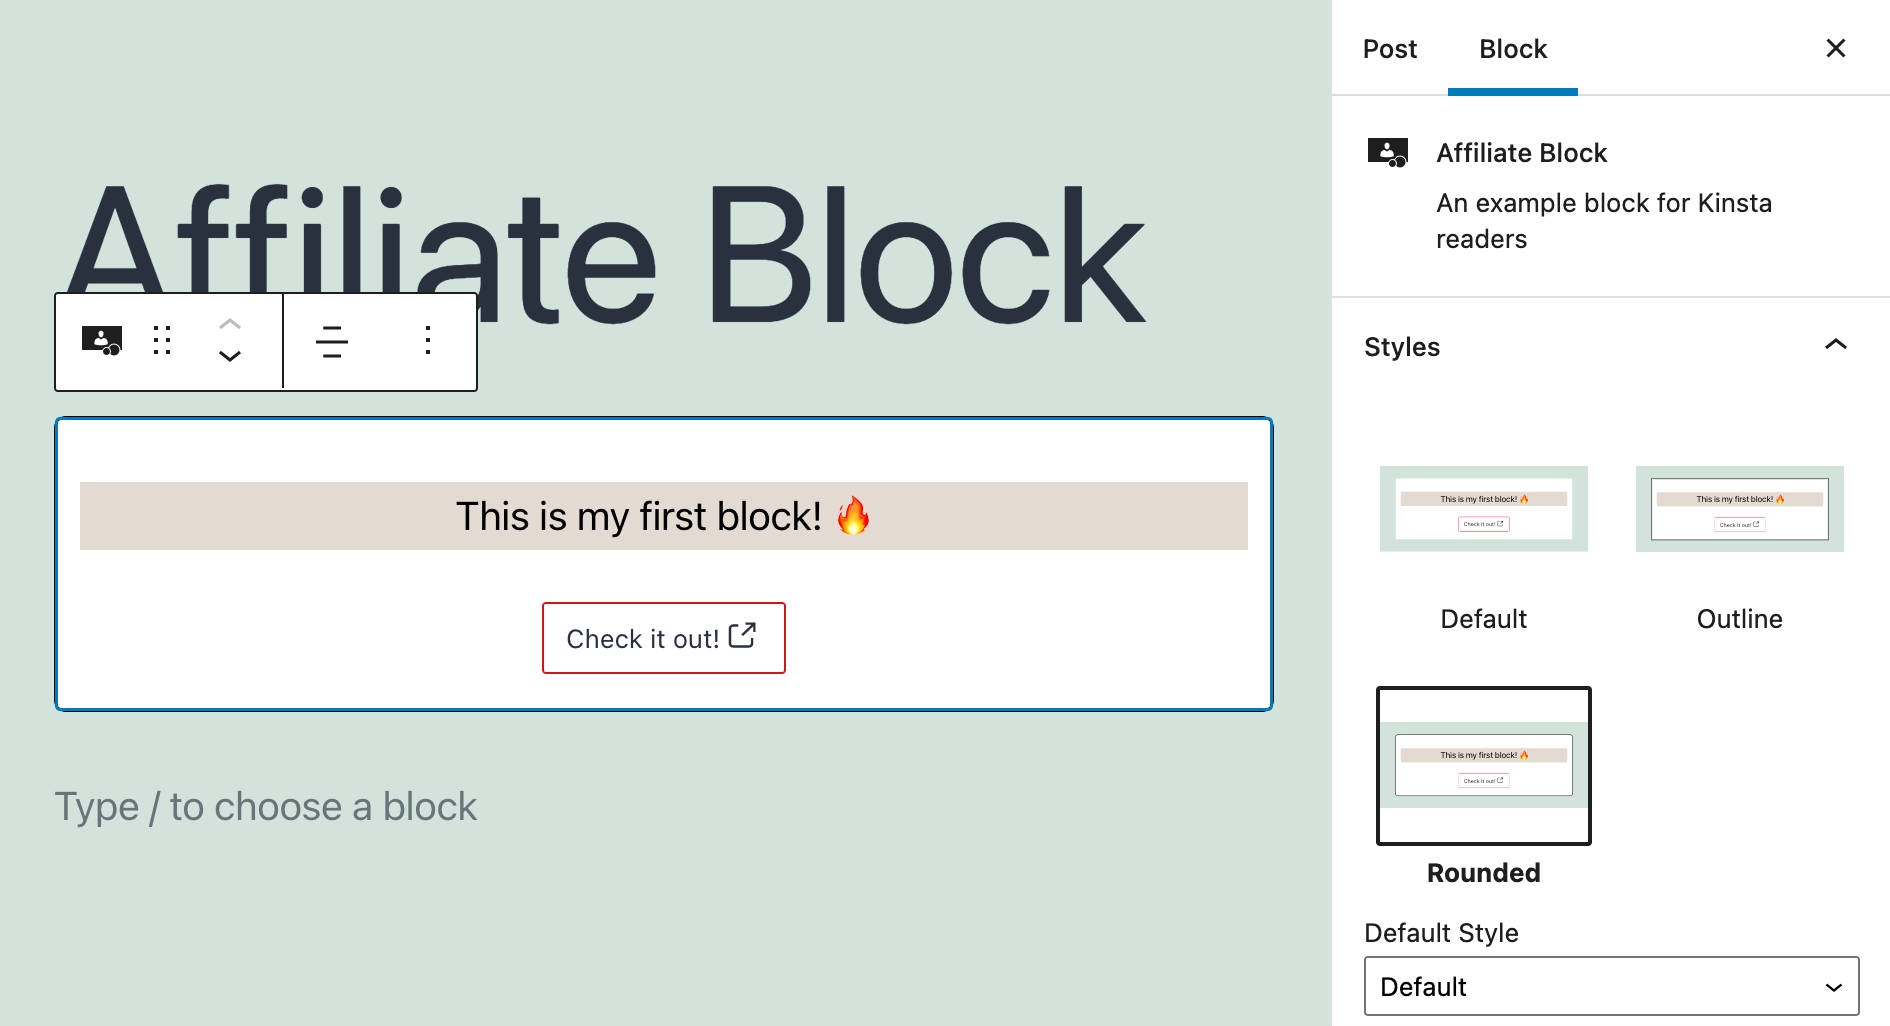 Affiliate block styles.